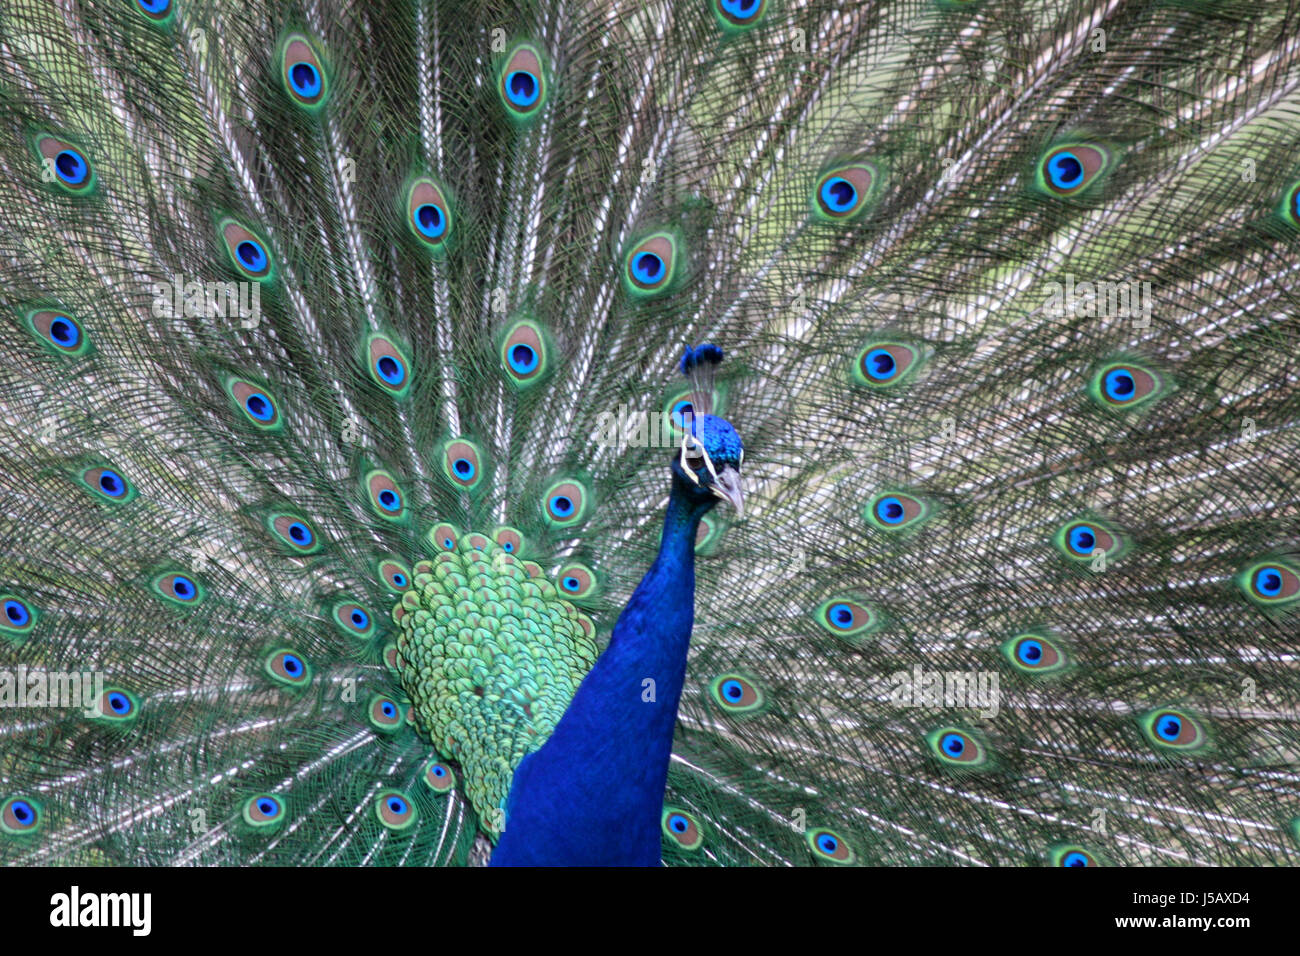 https://c8.alamy.com/comp/J5AXD4/blue-wheel-bird-birds-feathers-plumage-peacock-male-peacock-feather-J5AXD4.jpg